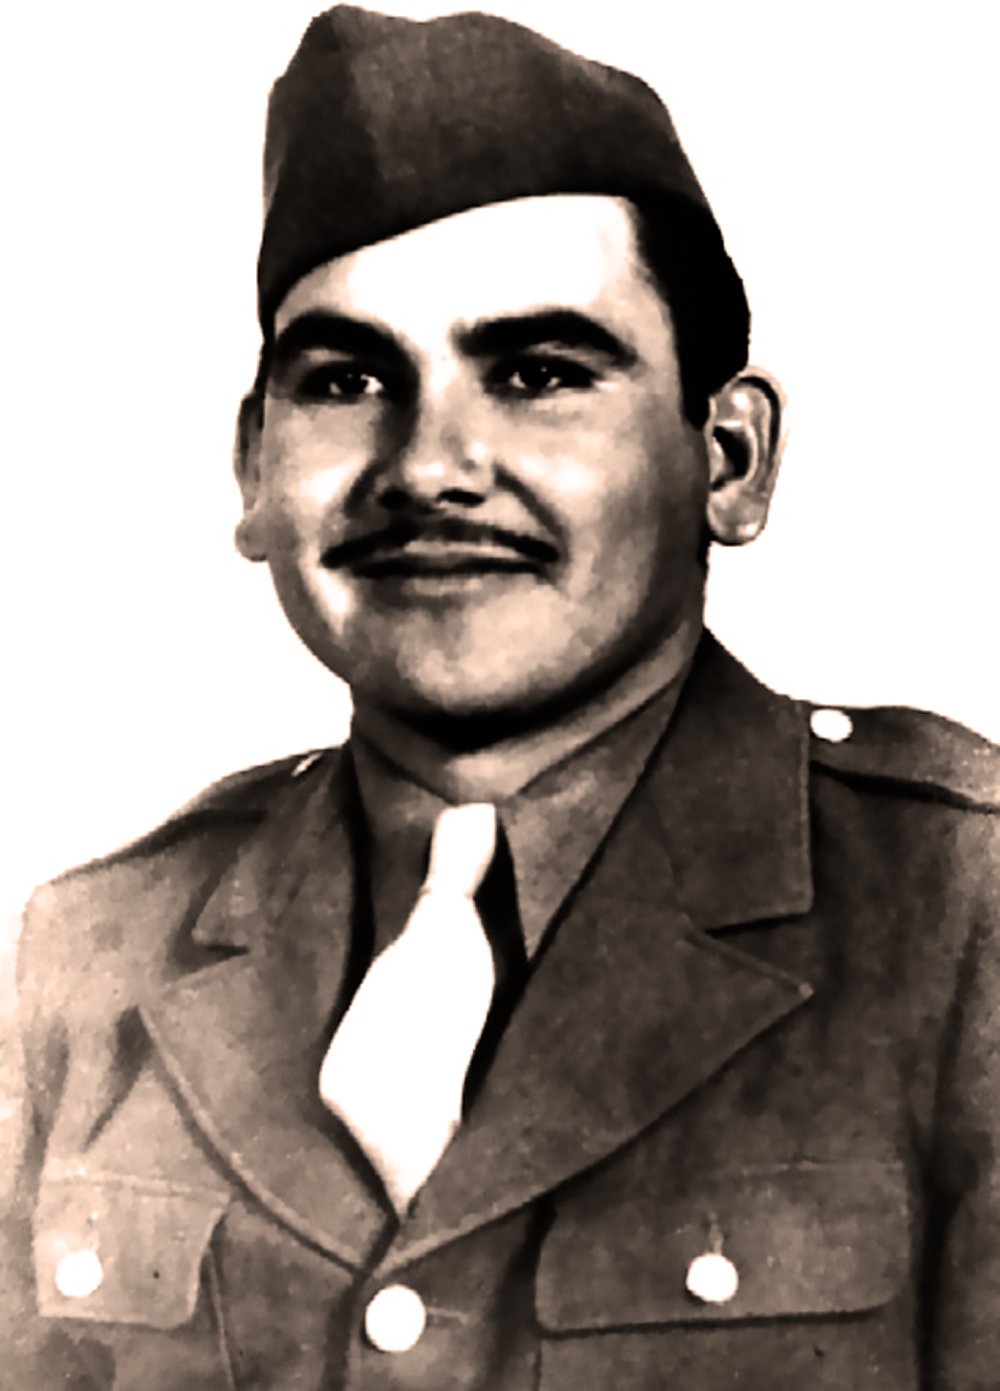 A black and white photo portrait of Private Felix Z. Longoria Jr. in military uniform.